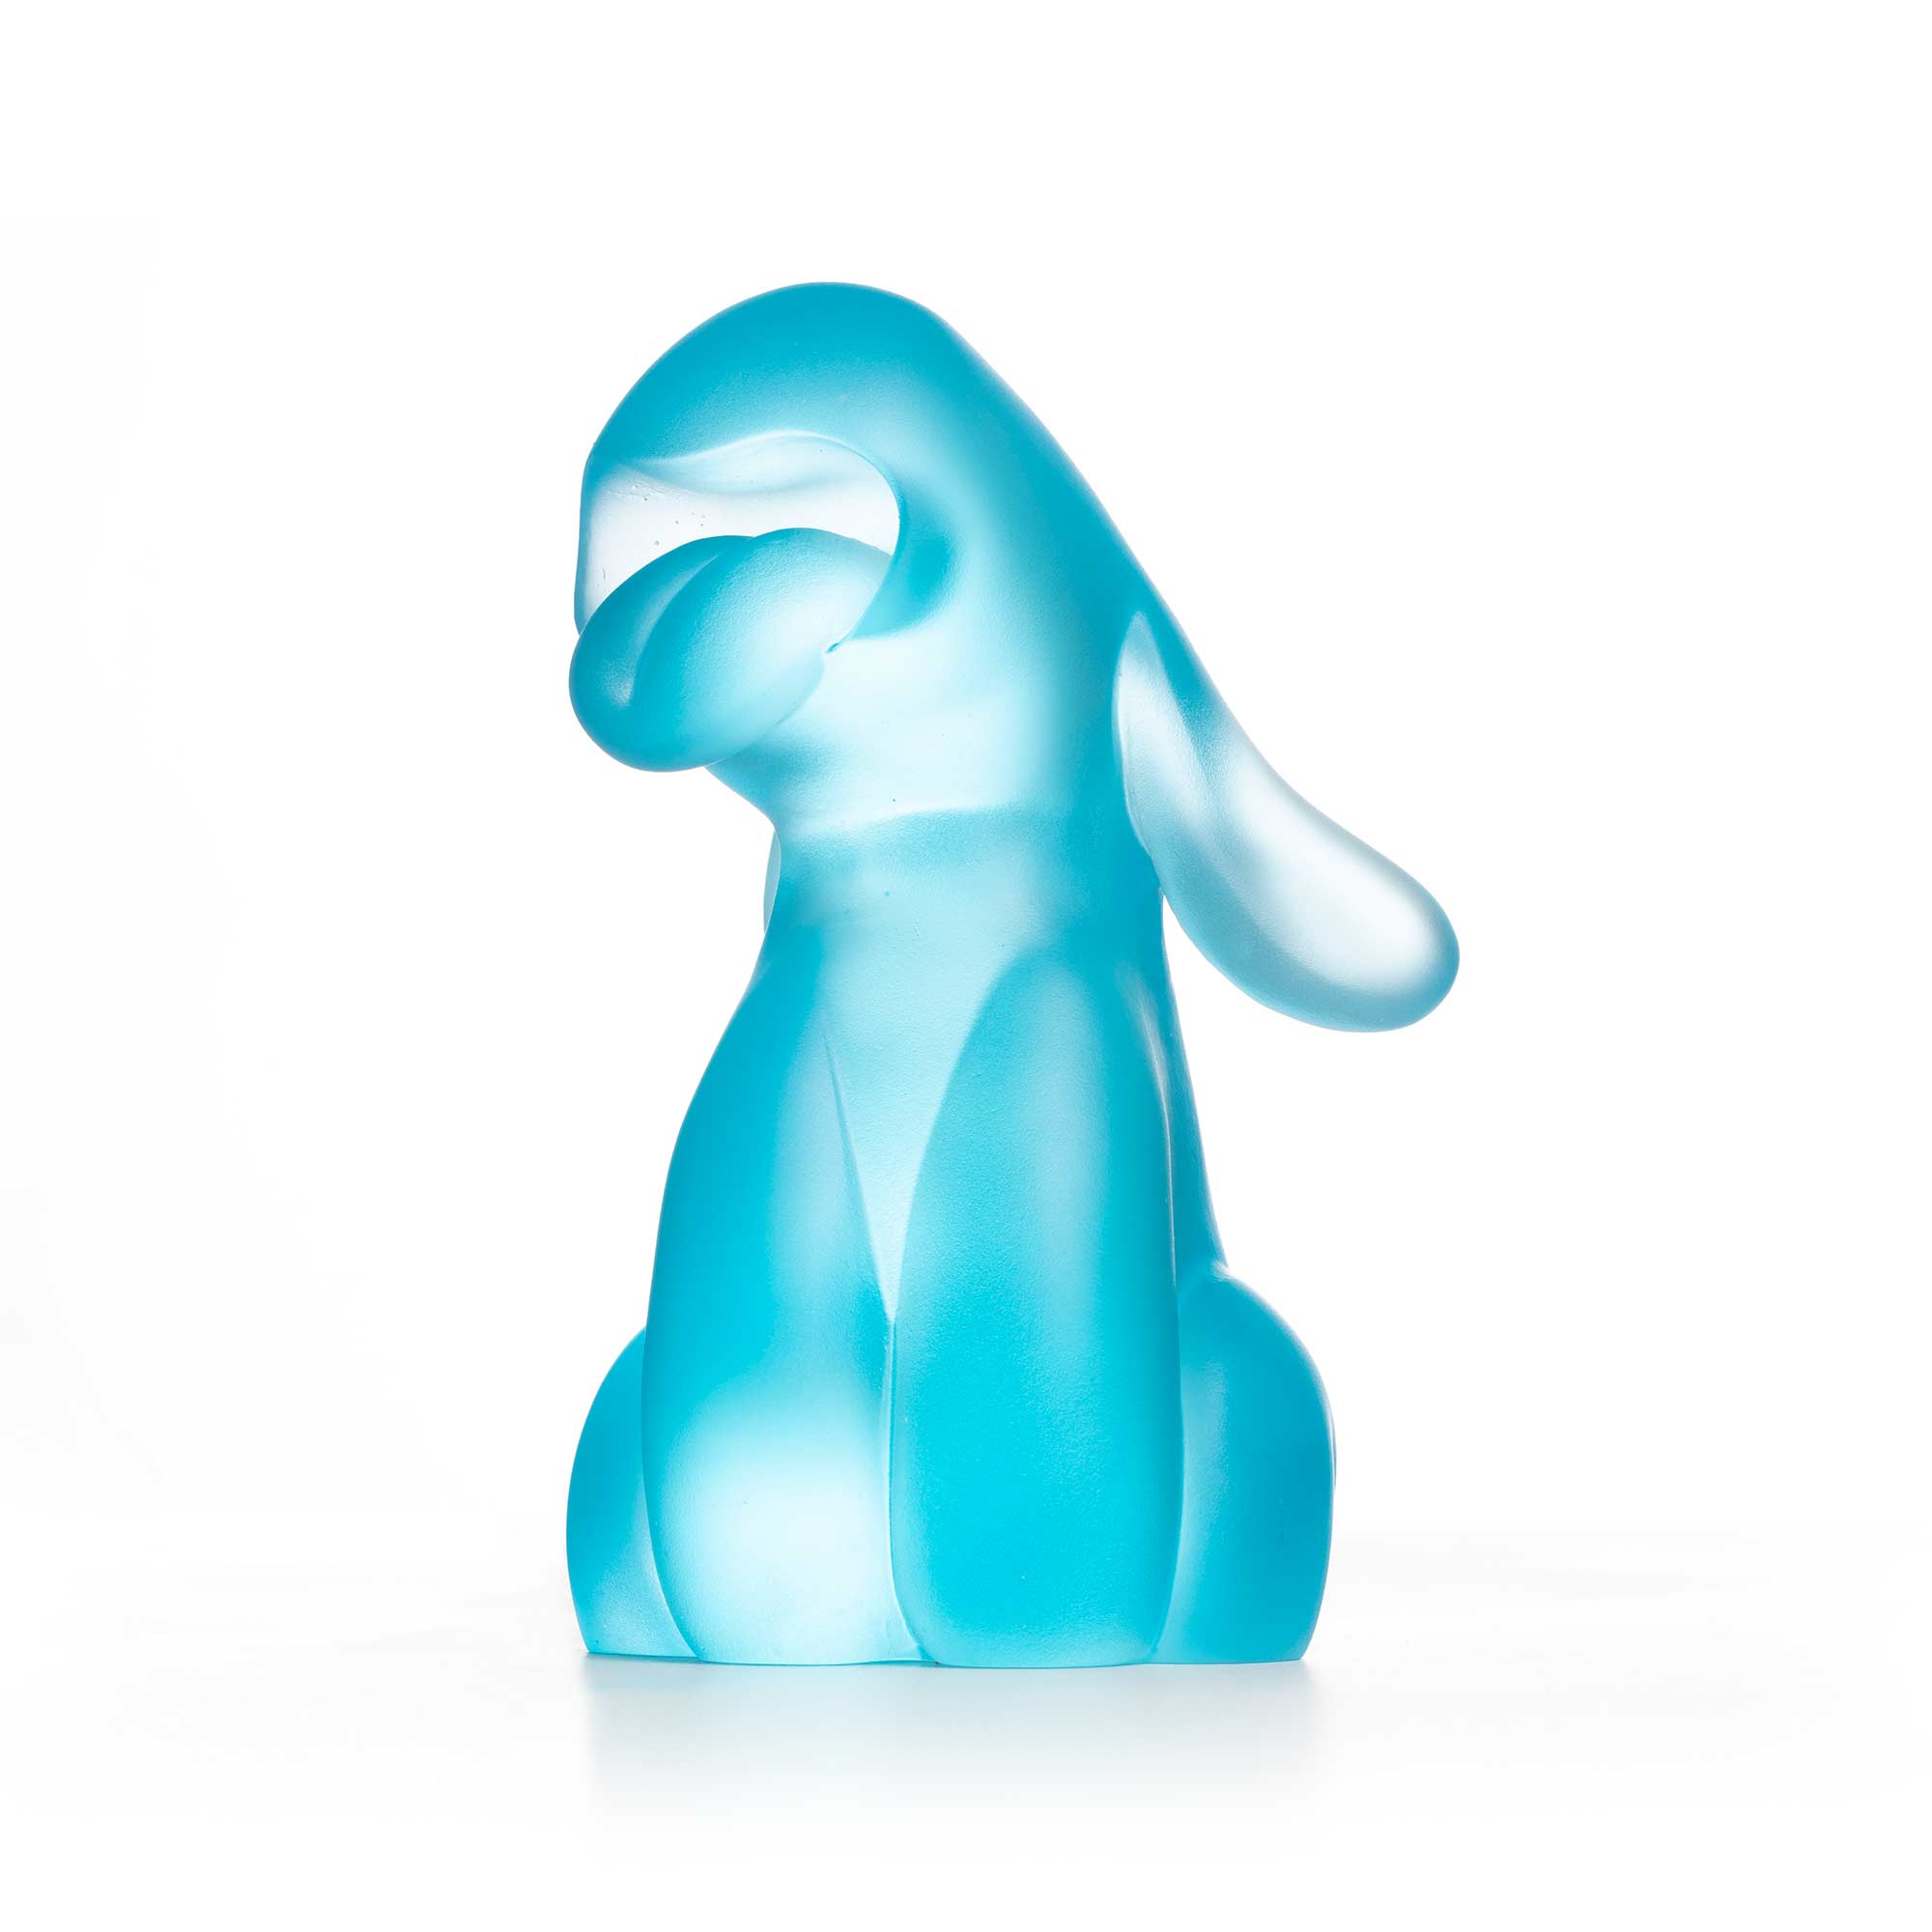 Dog Roar, blue crystal sculpture, limited edition by artist Ferdi B Dick, hero view